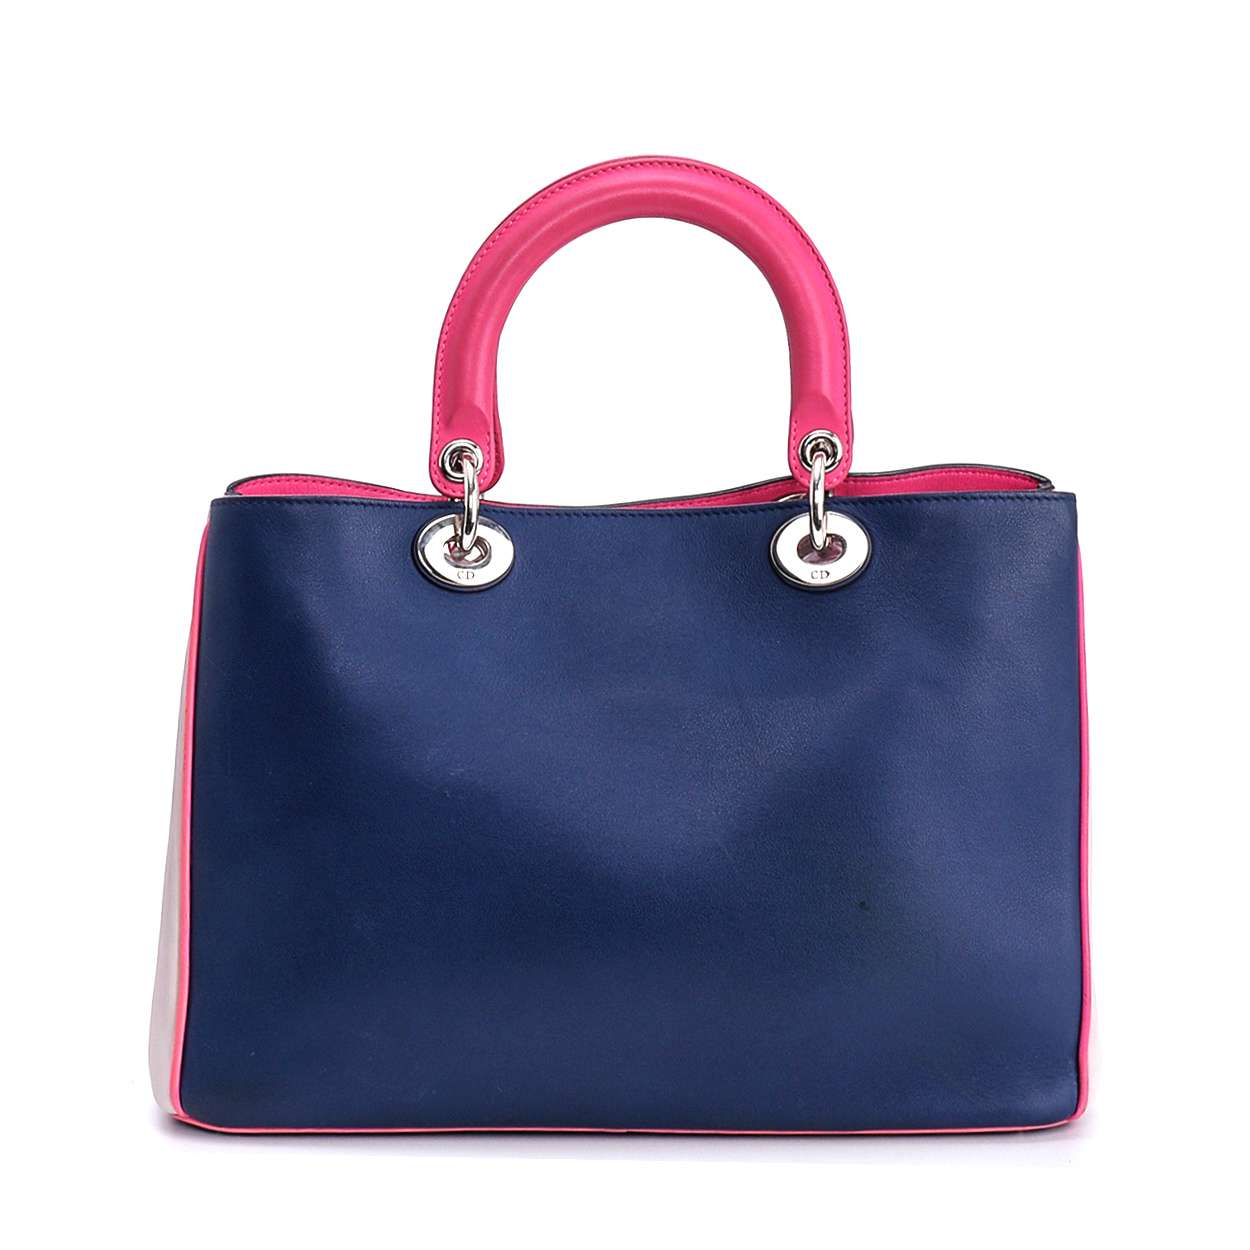 Christian Dior - Tricolor Smooth Leather Medium Diorissimo Bag